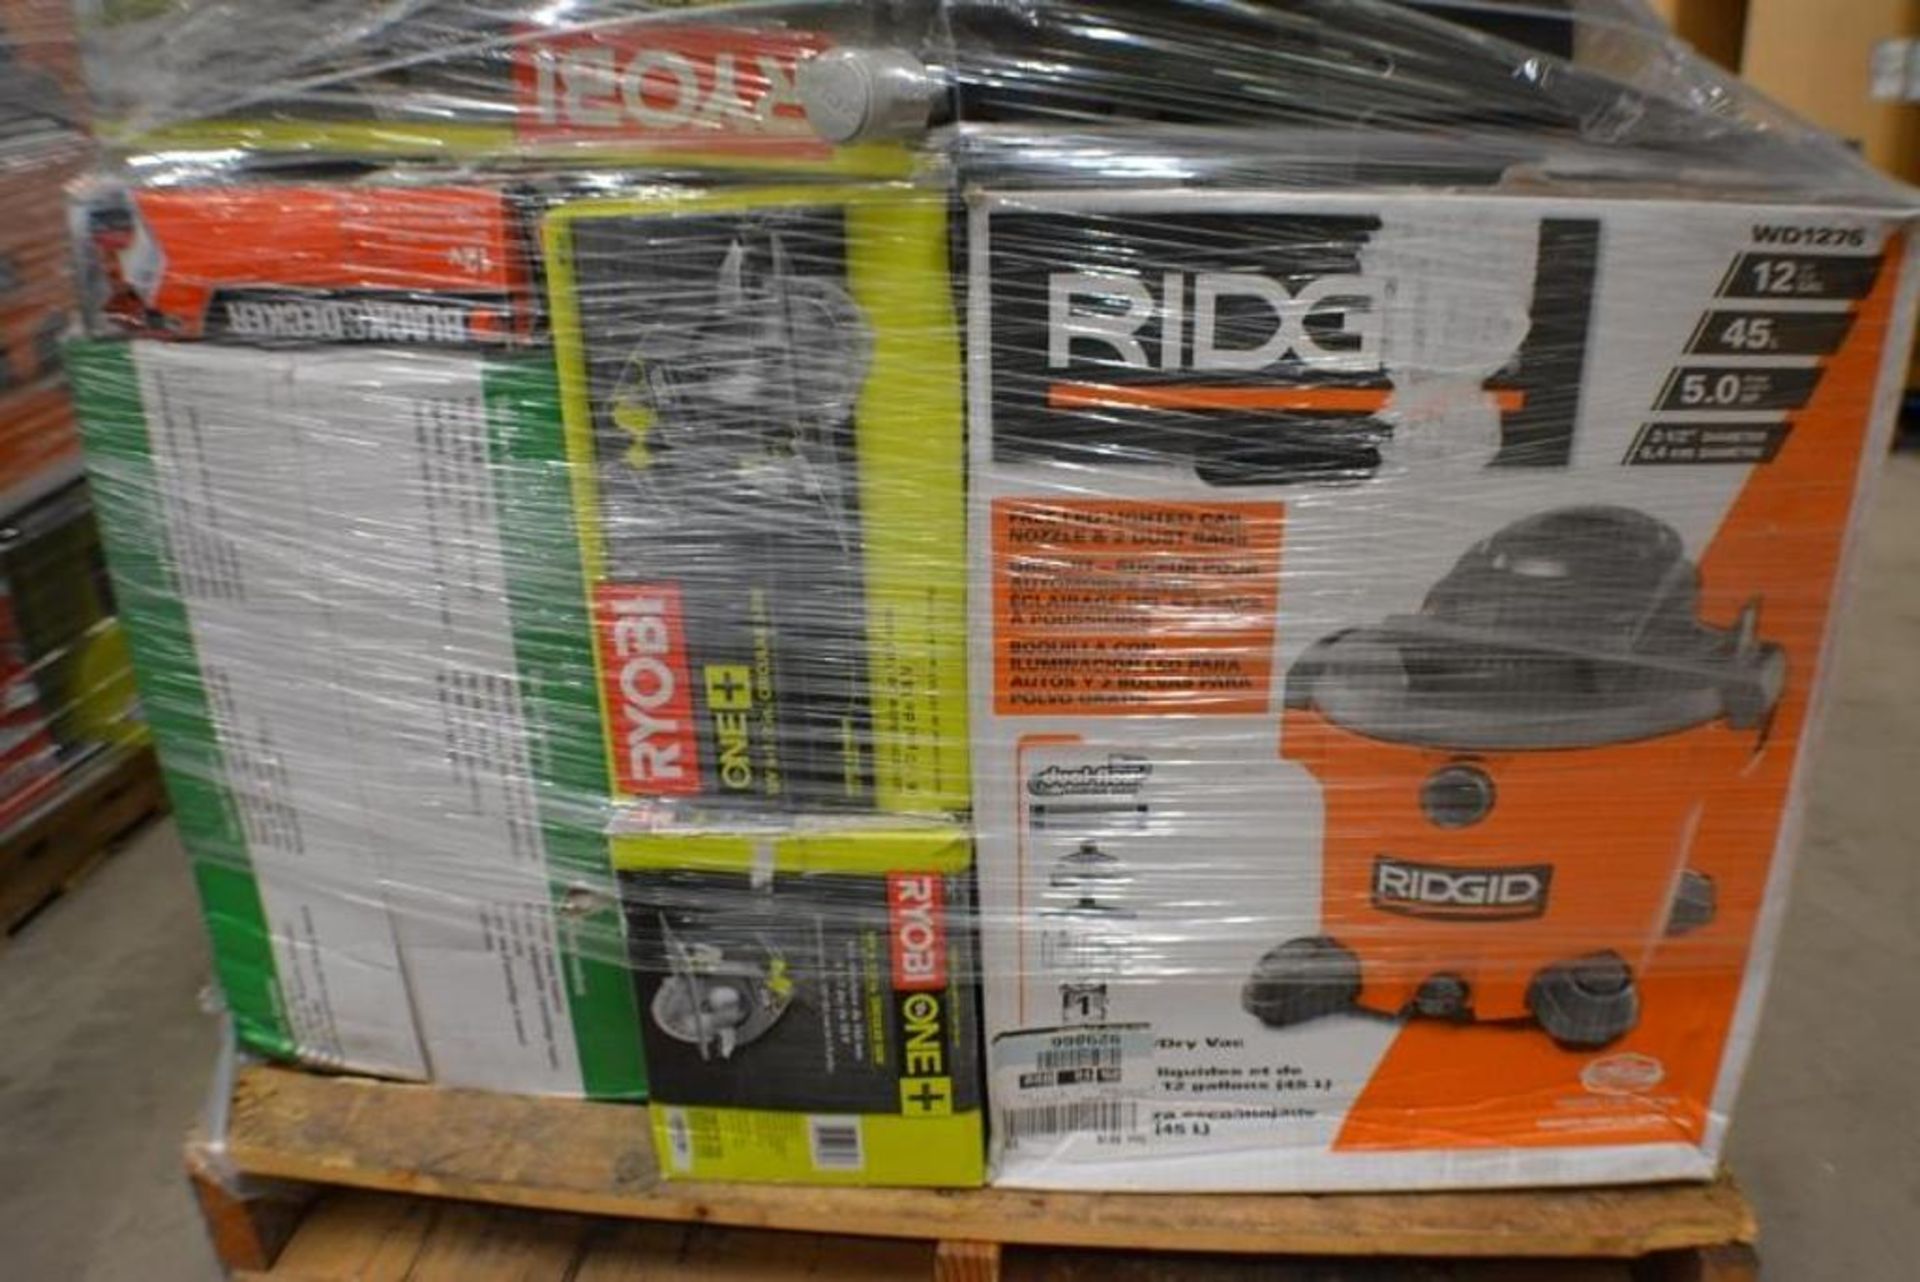 Tools and Garden Equipment by Ridgid + Ryobi + Black and Decker. Saws + Nail Guns + Vacuums + Wet Ti - Image 3 of 9